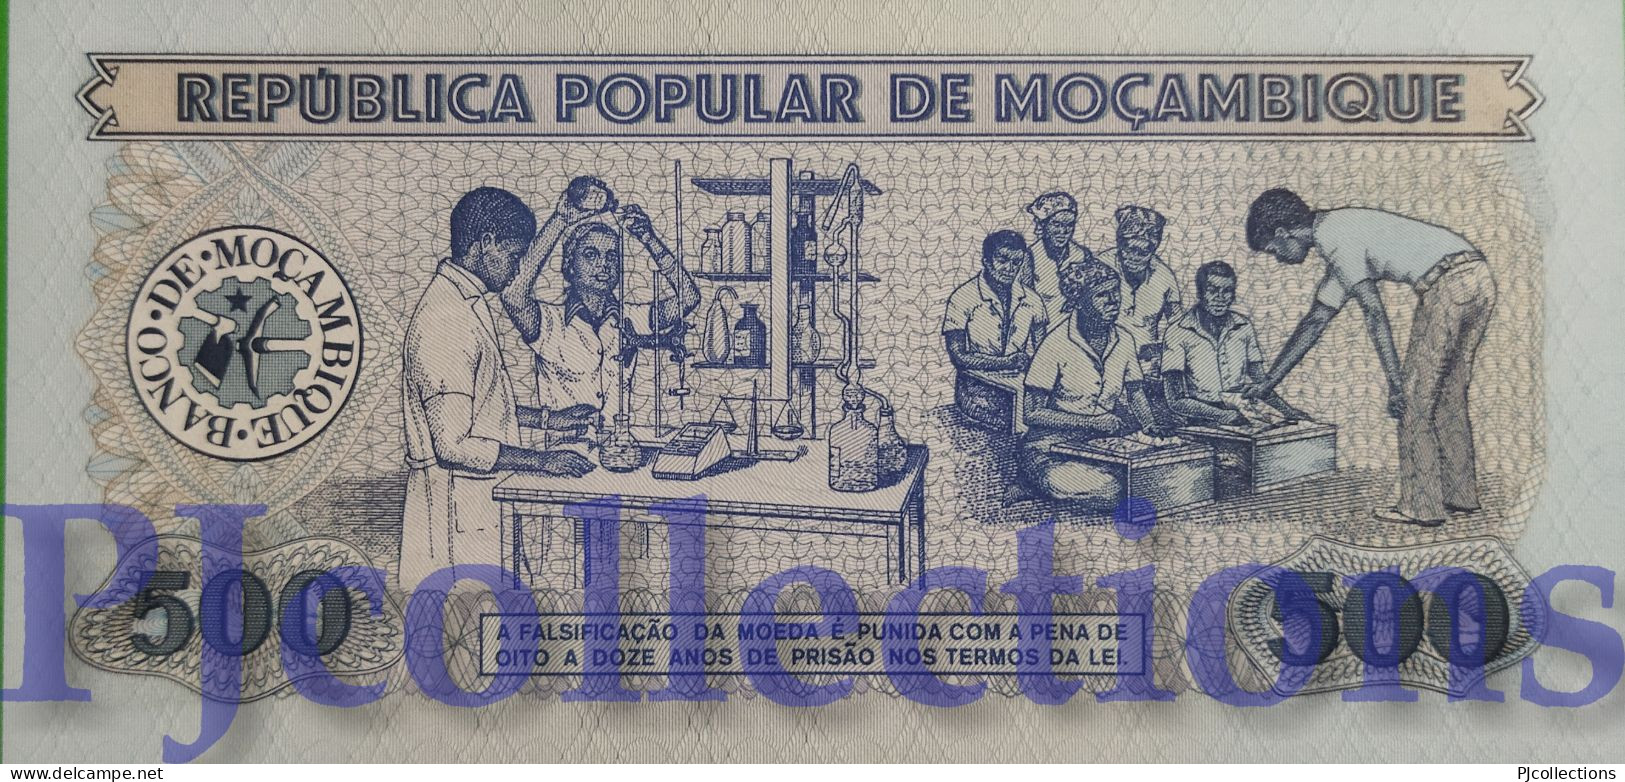 MOZAMBIQUE 500 ESCUDOS 1980 PICK 127 UNC LOW SERIAL NUMBER "AA0003686" - Moçambique